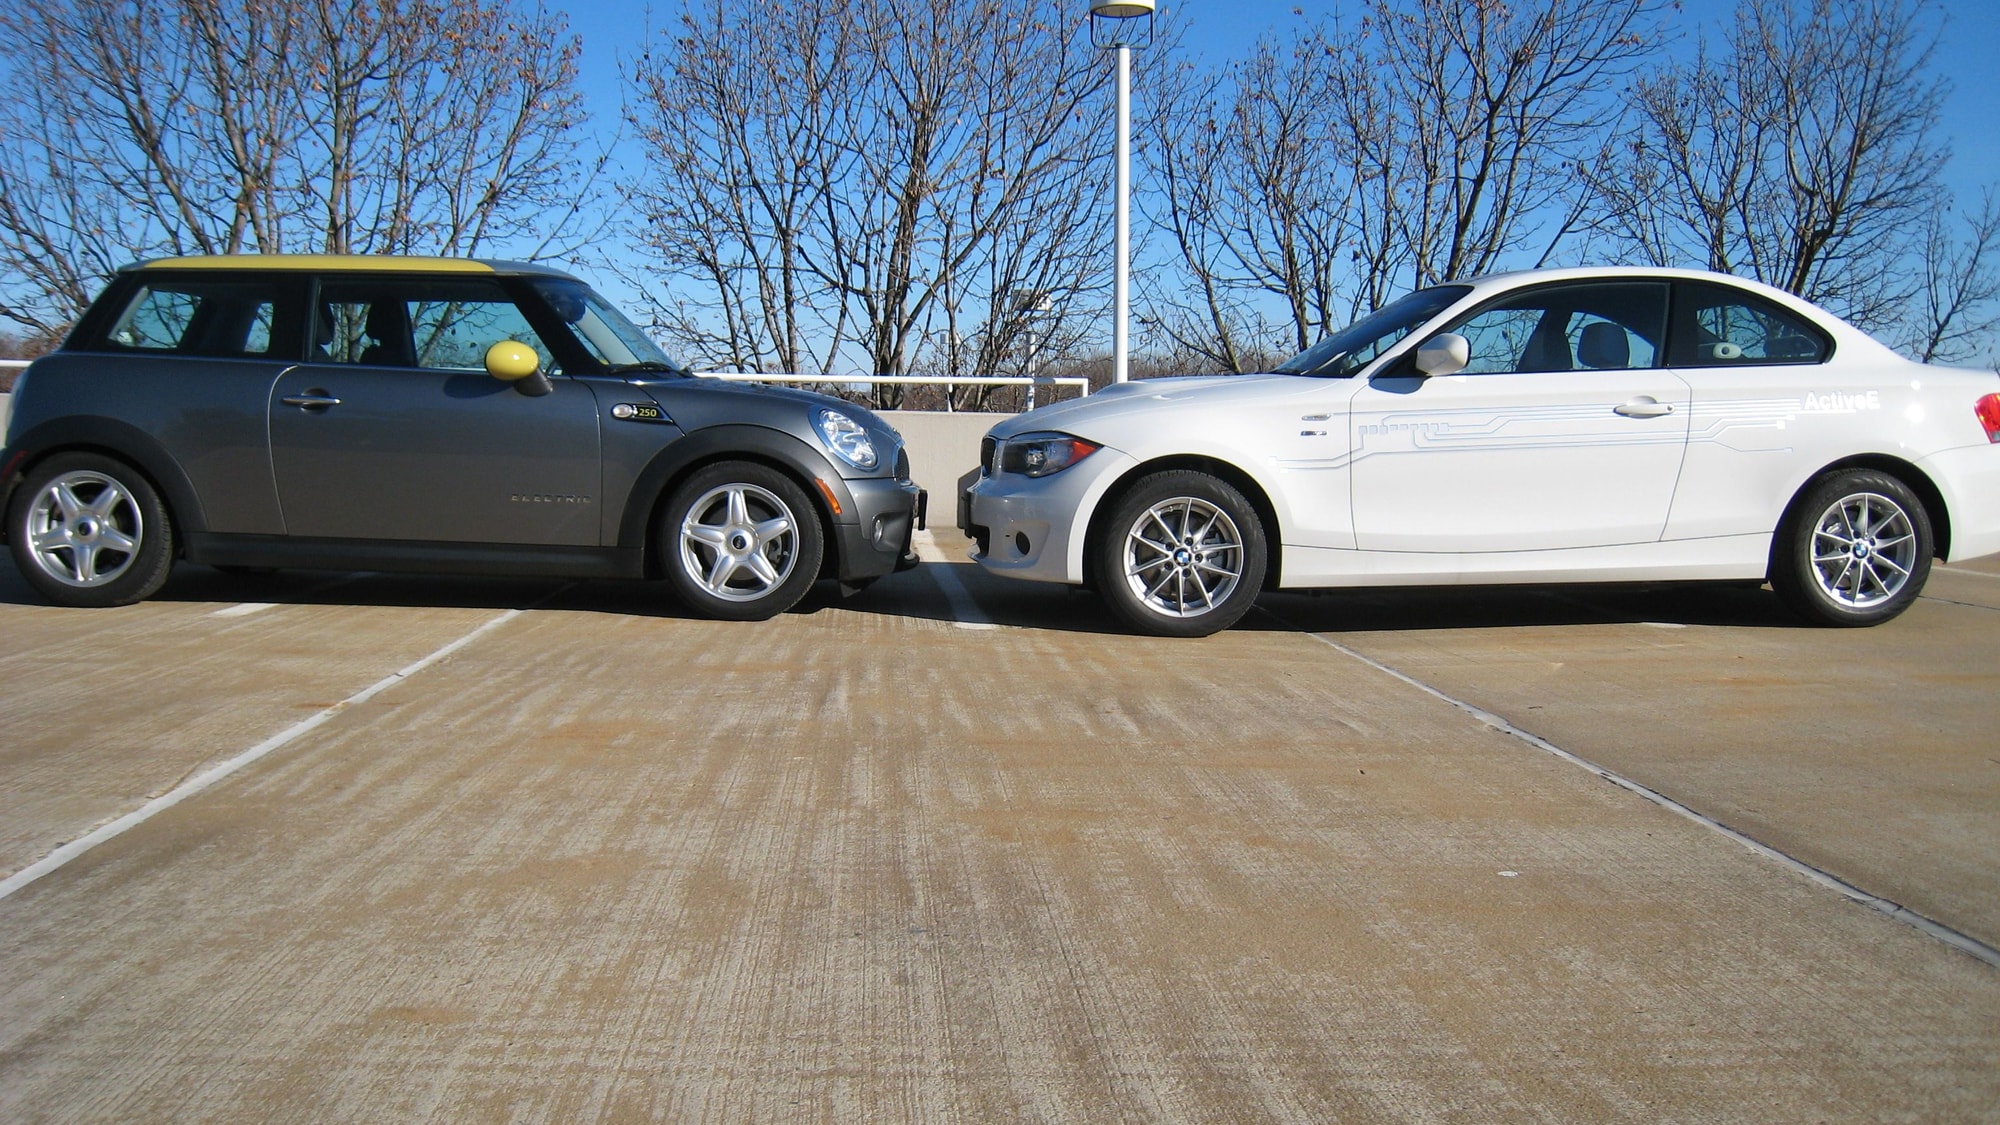 Mini E and BMW ActiveE electric cars, New Jersey, Dec 2011 (photos: Tom Moloughney)